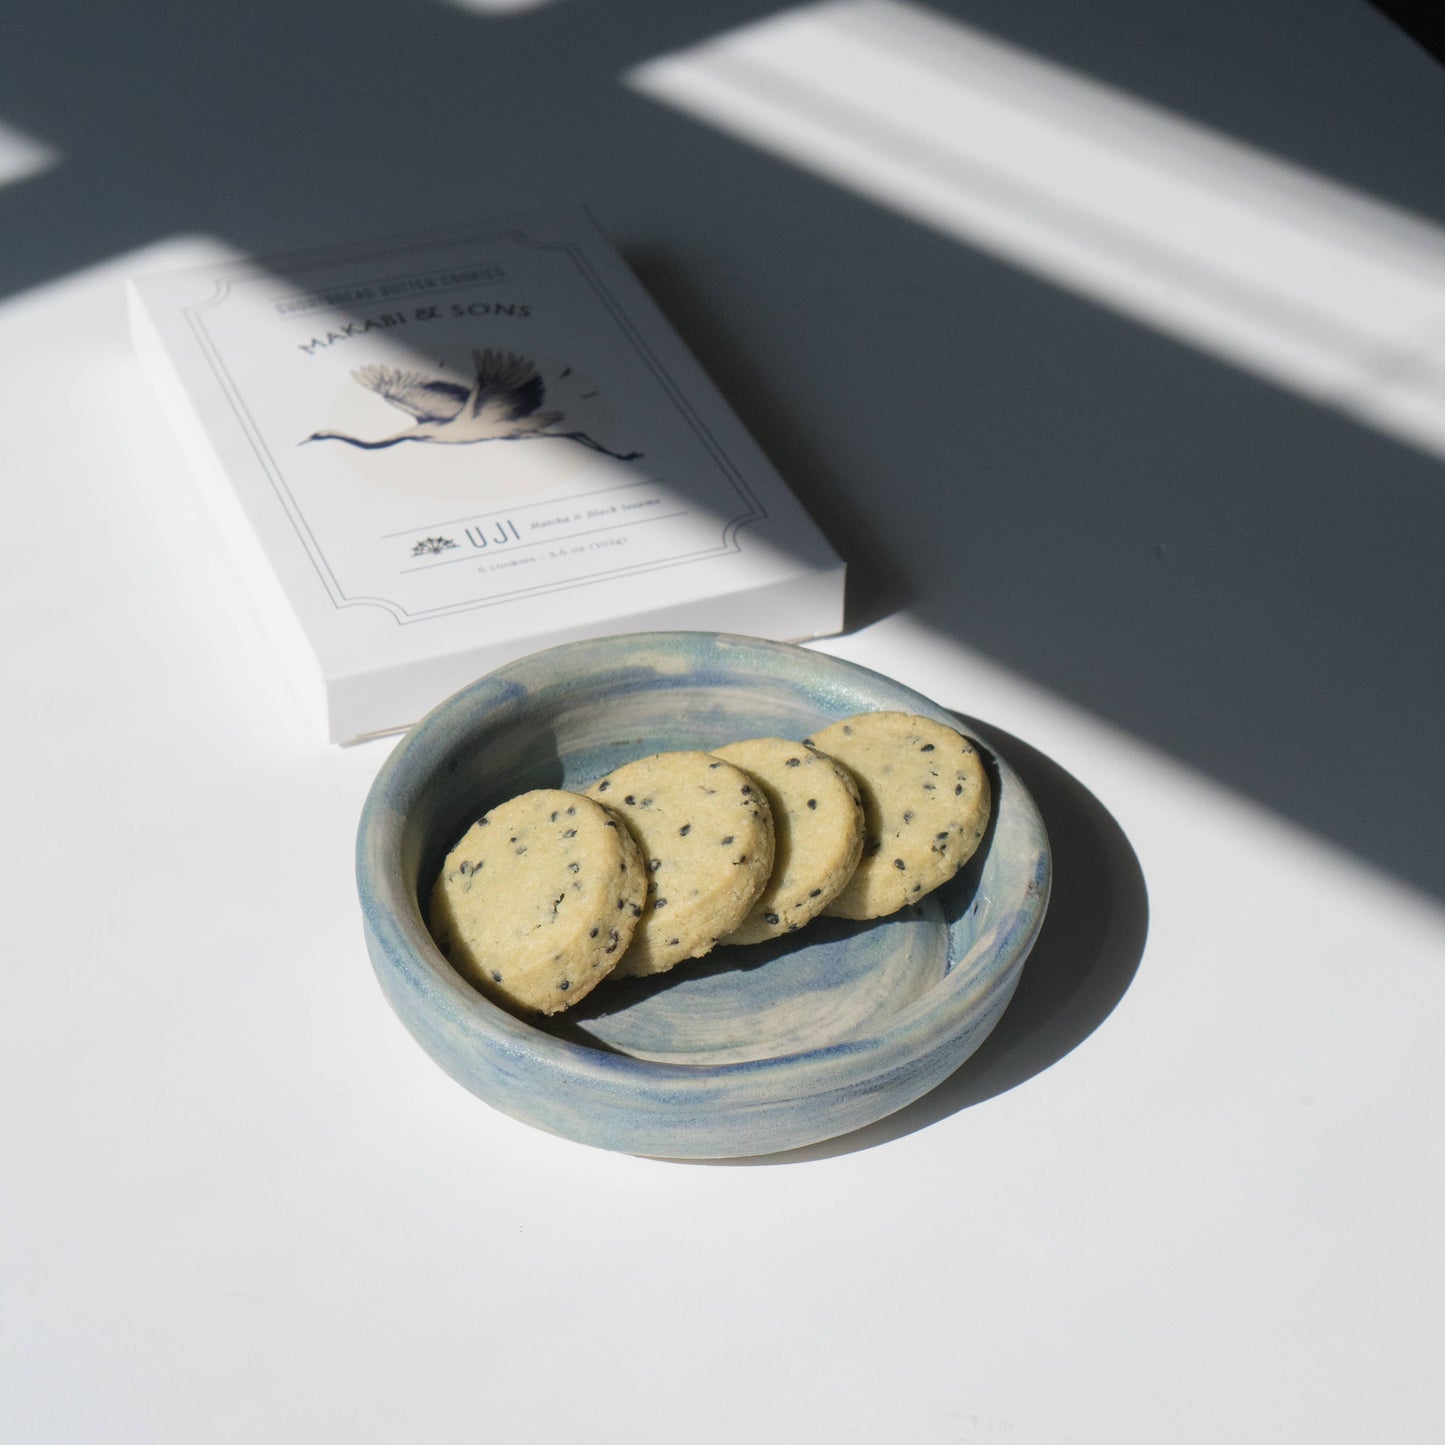 Makabi & Sons - Matcha Toasted Black Sesame Cookies - Uji